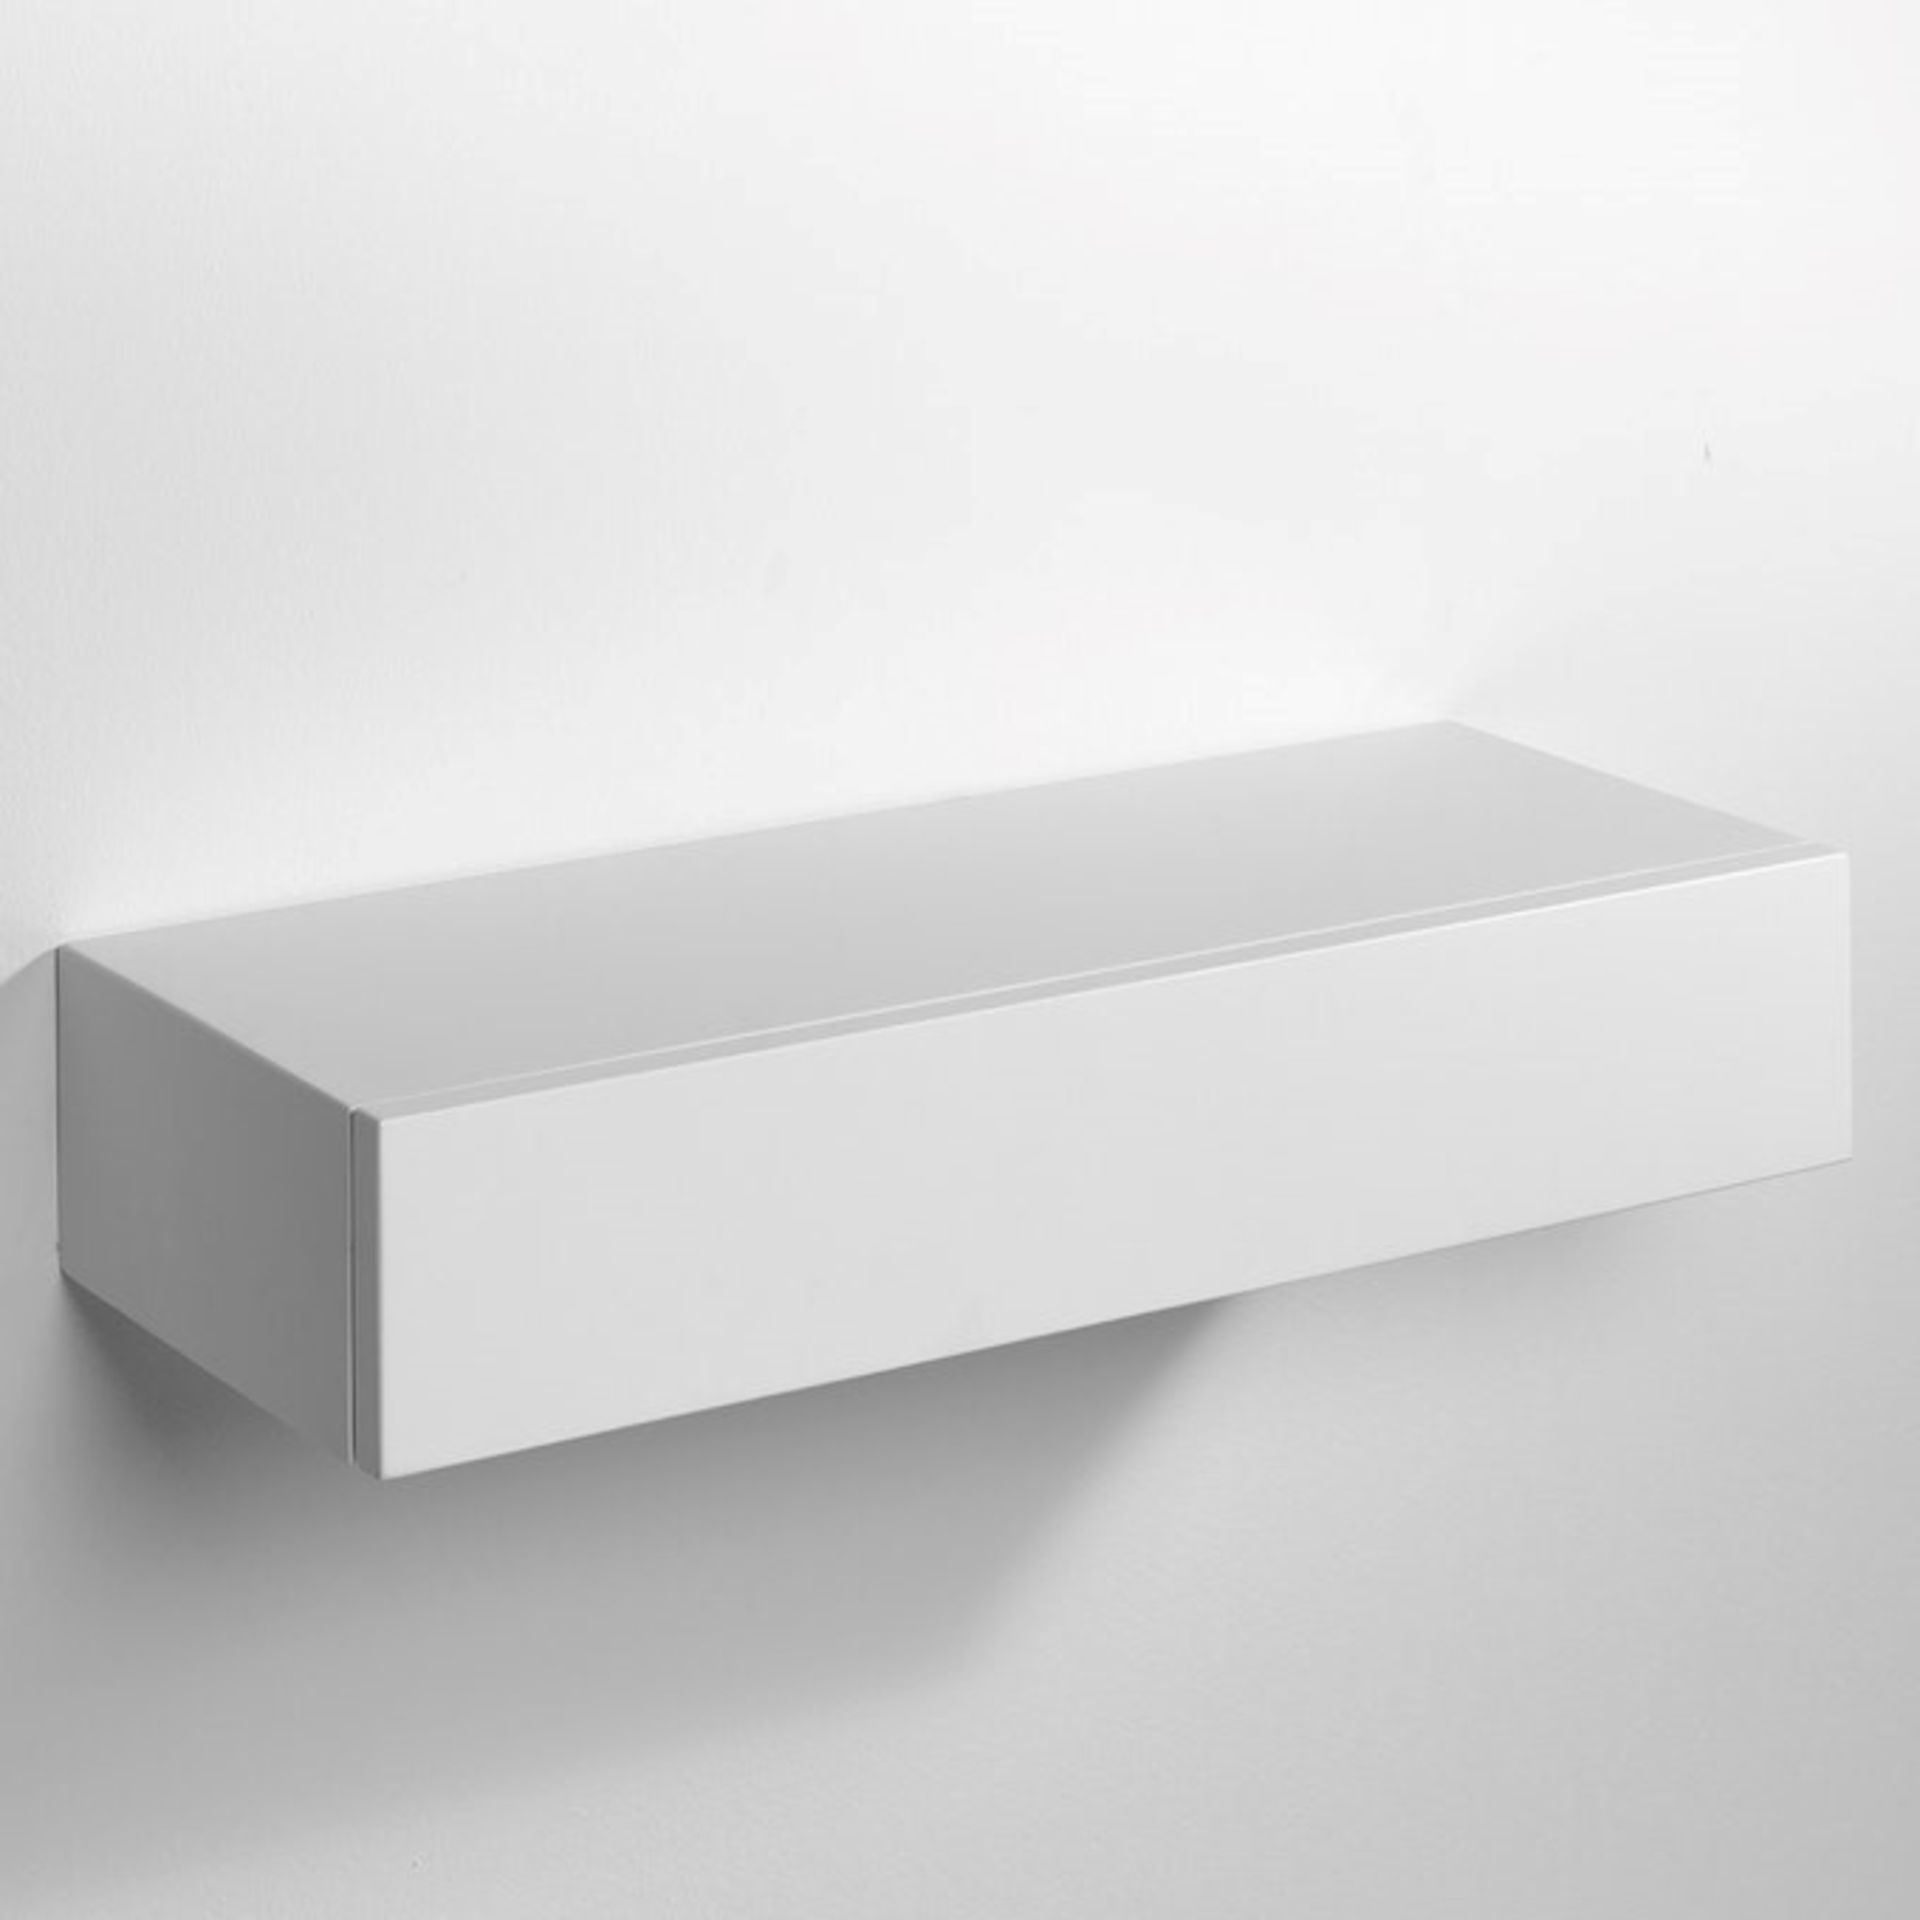 1 GRADE B BOXED DESIGNER VESPER 1 DRAWER SHELF UNIT IN WHITE / RRP £65.00 (PUBLIC VIEWING